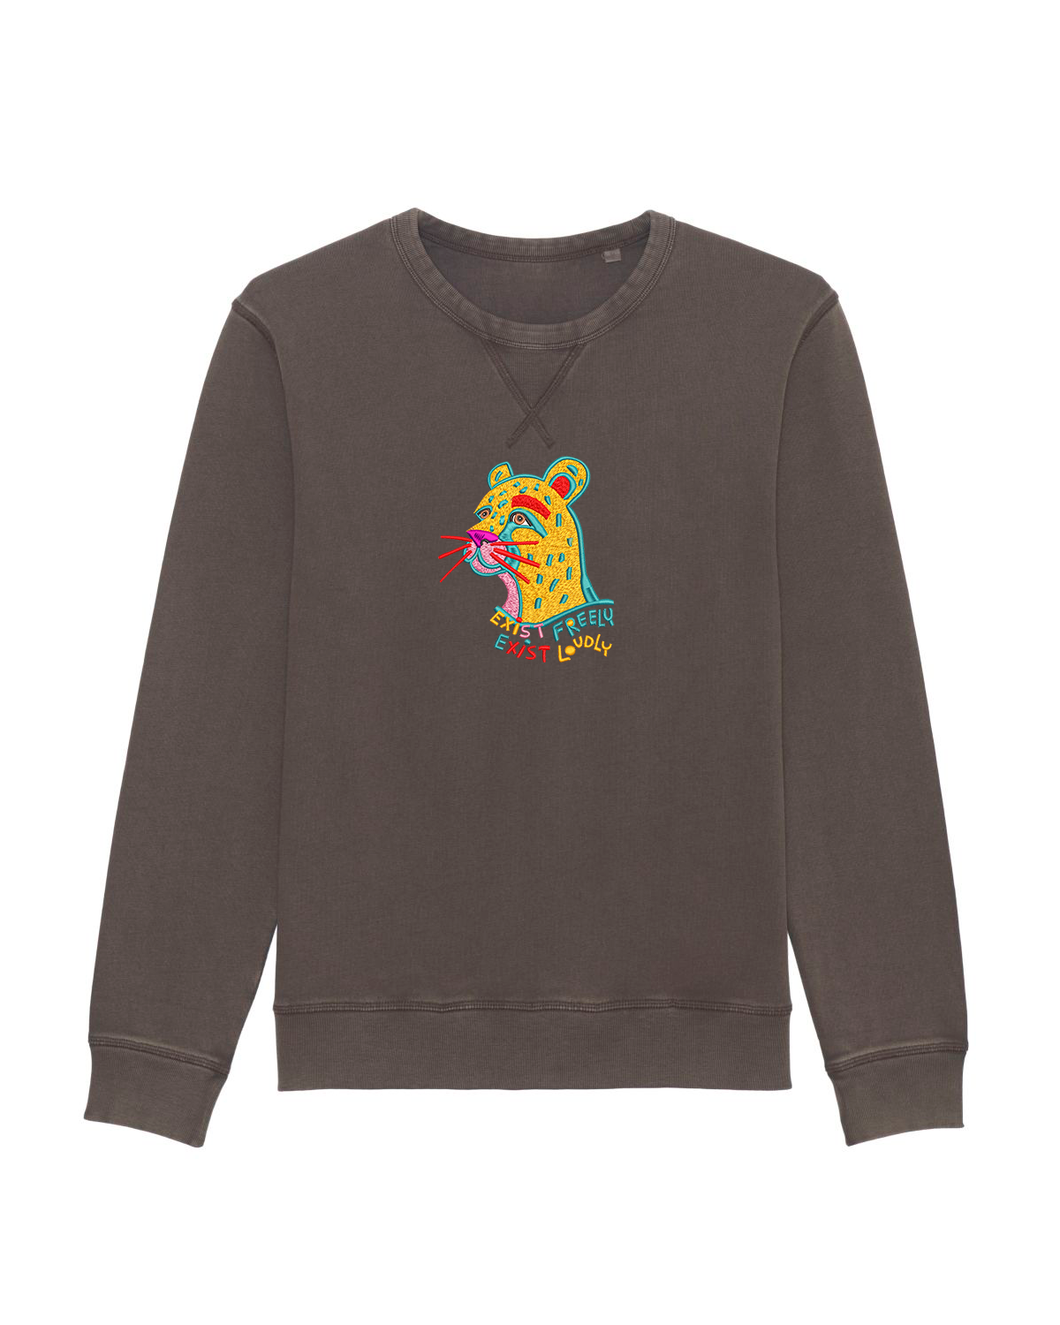 Cheetah 🐆- Embroidered UNISEX CREW NECK garment dyed sweatshirt